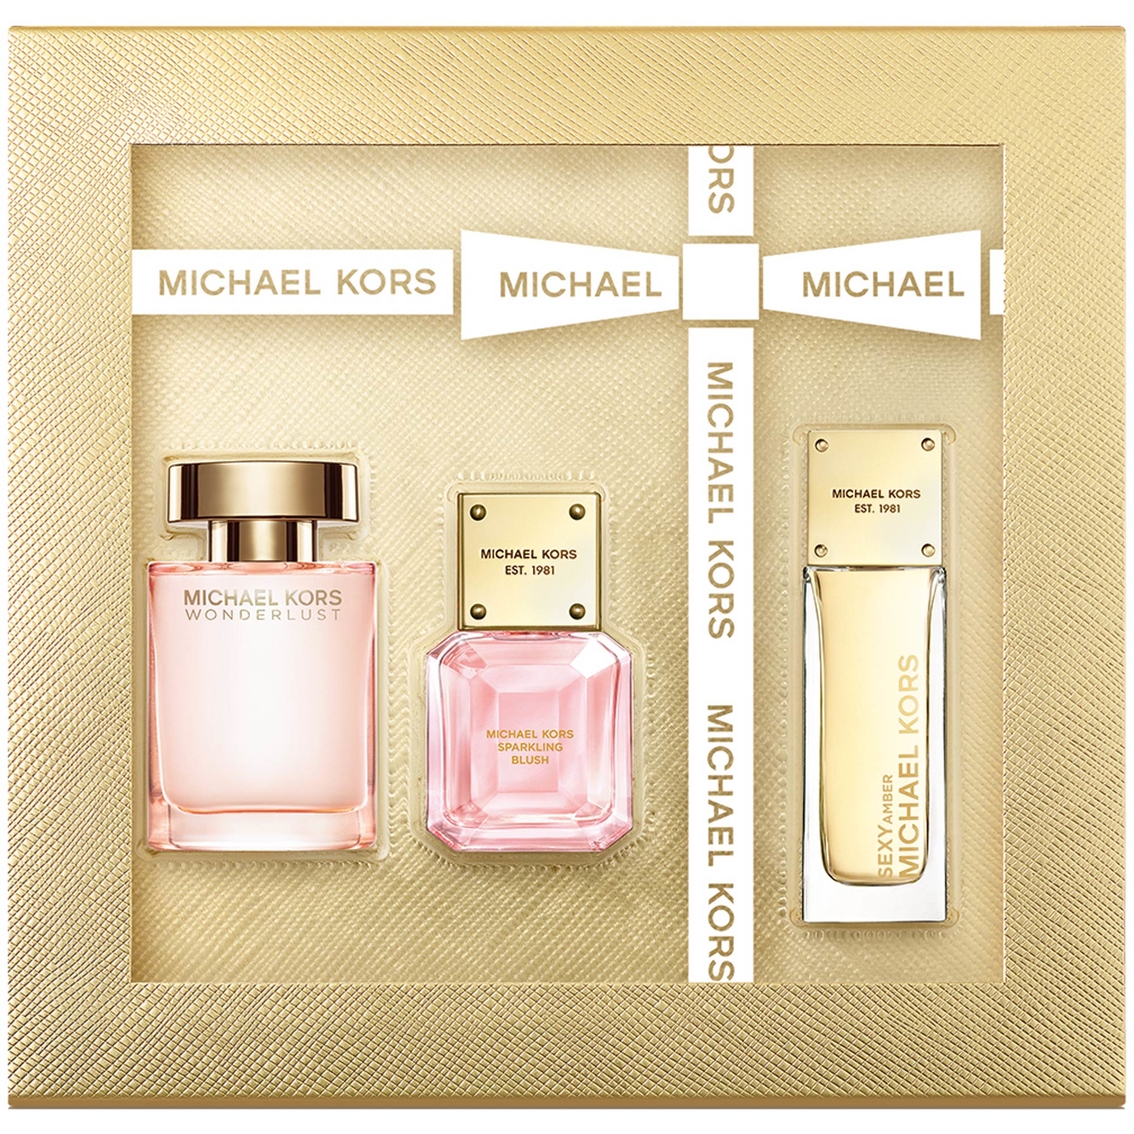 michael kors perfume sets